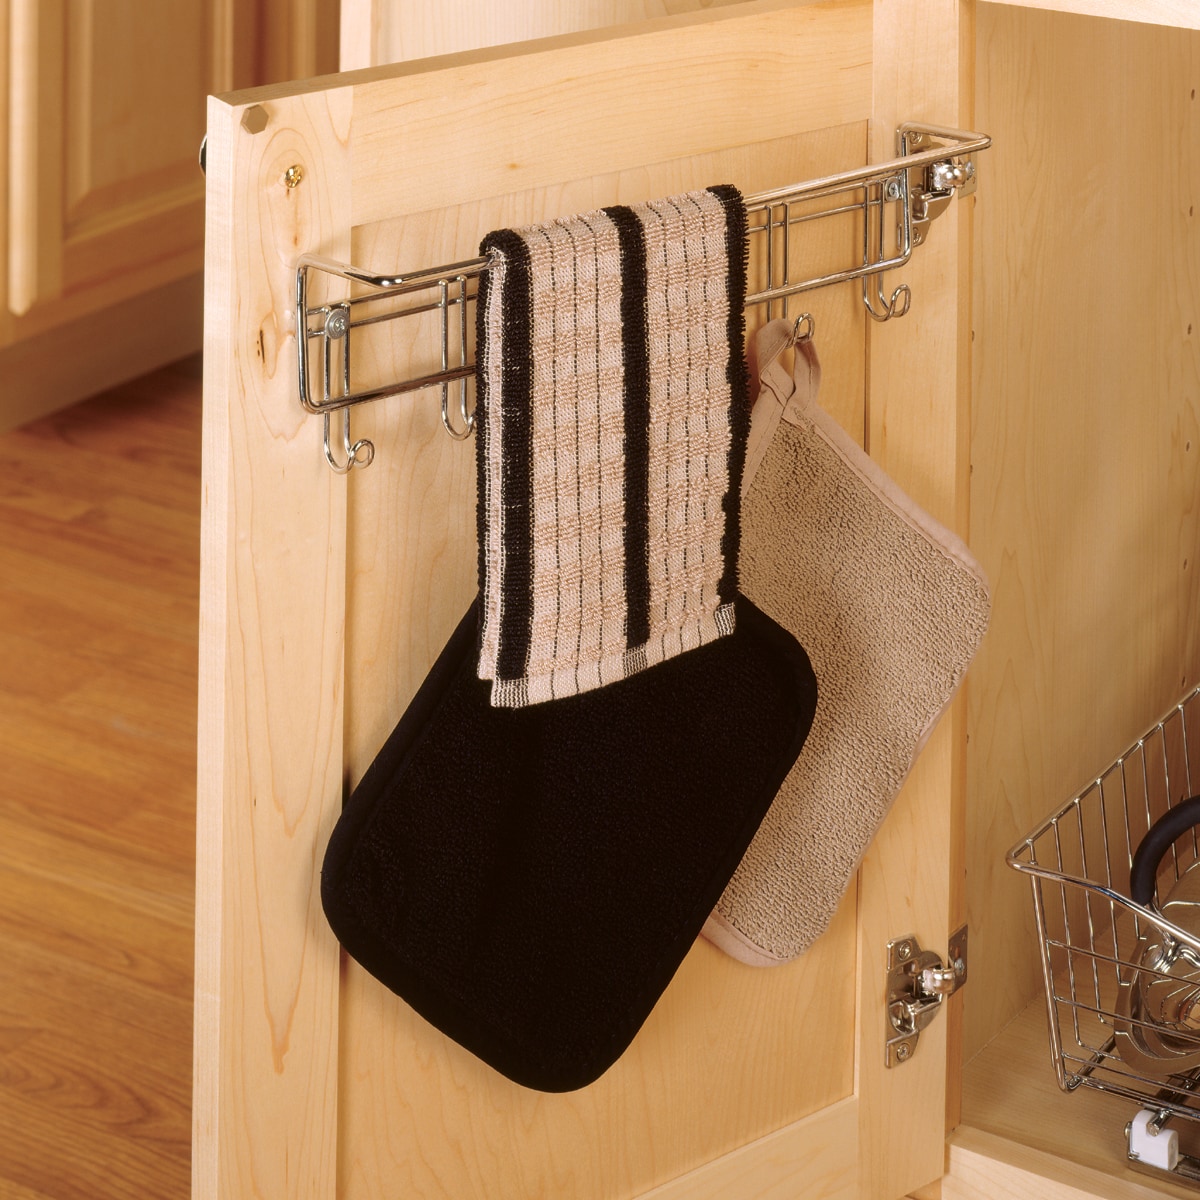 2 Pack Kitchen Towel Holder - Over Cabinet Towel Bar Rack - 14 Stainless  Steel Towel Rack Inside Cabinet Drawer for Bathroom and Kitchen (Large) 